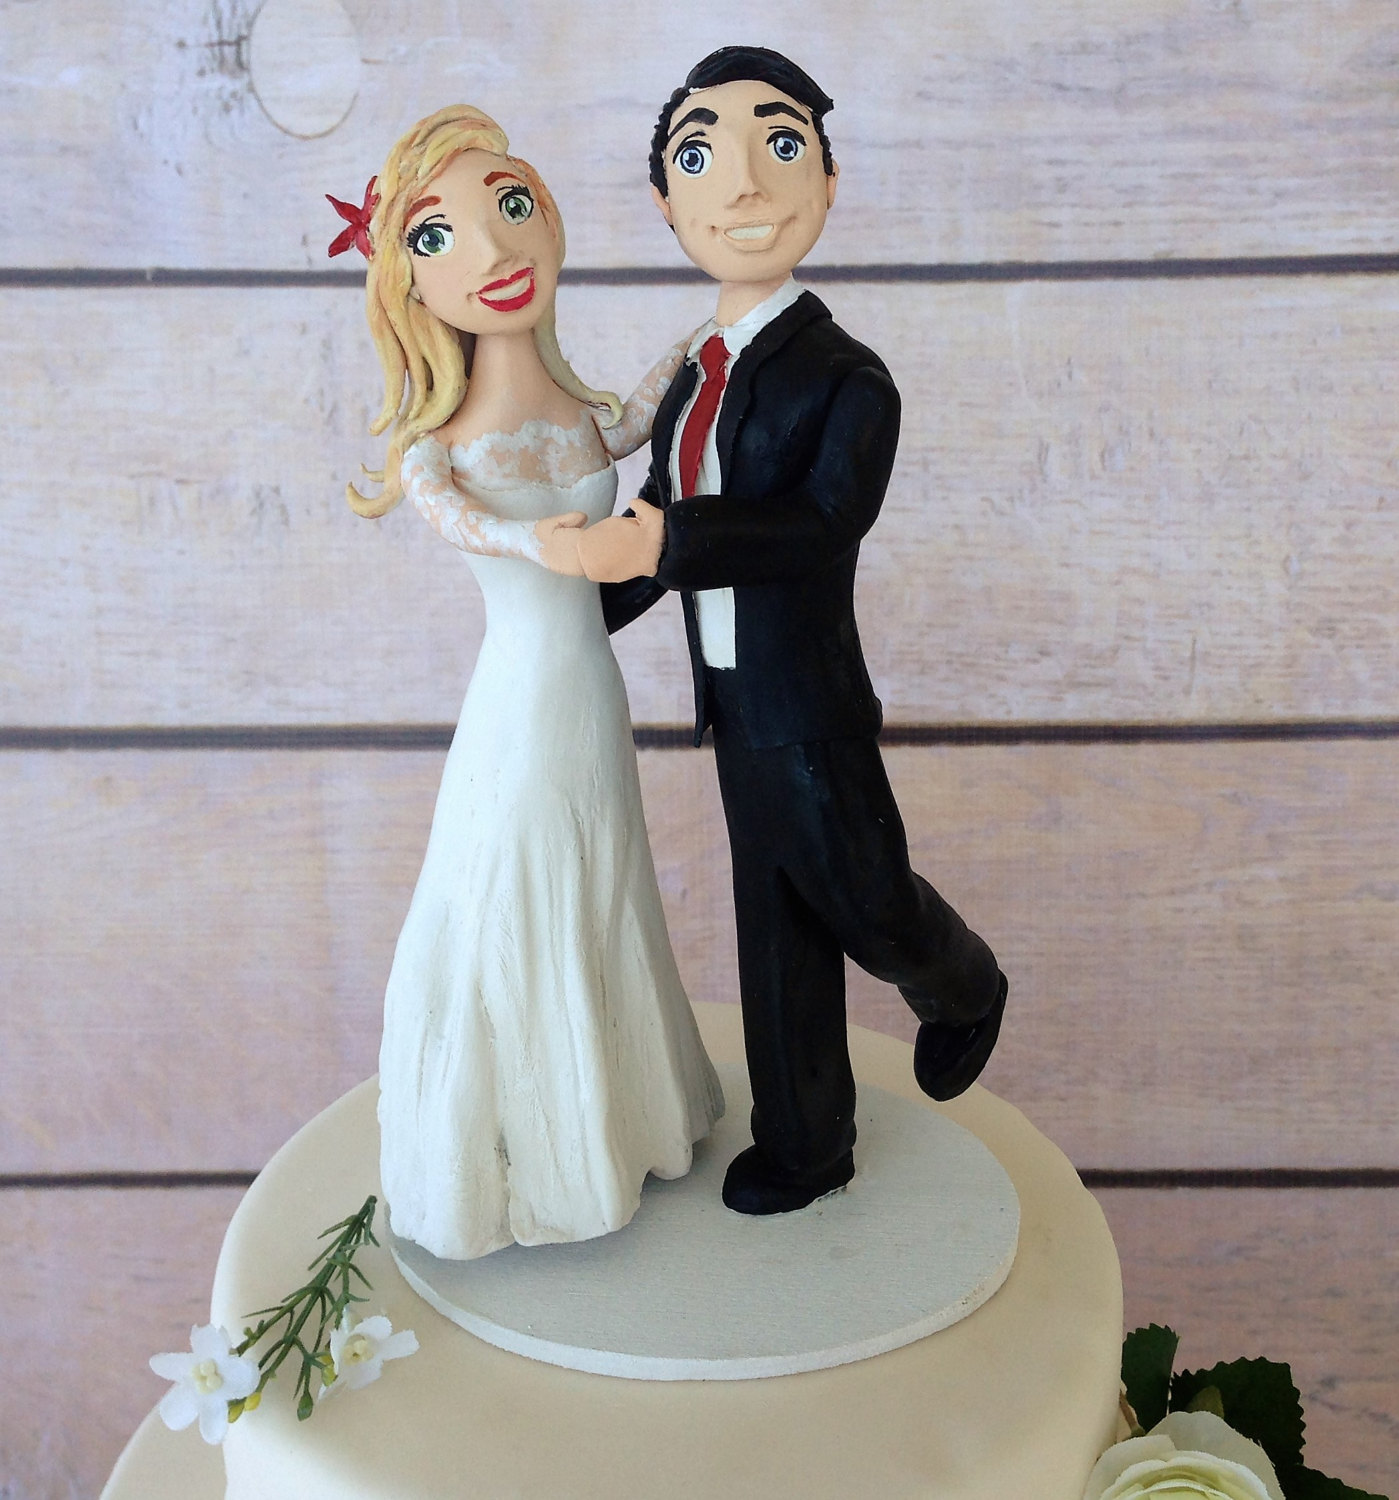 dancing bride and groom cake topper | https://emmalinebride.com/wedding/dancing-bride-and-groom-cake-topper/